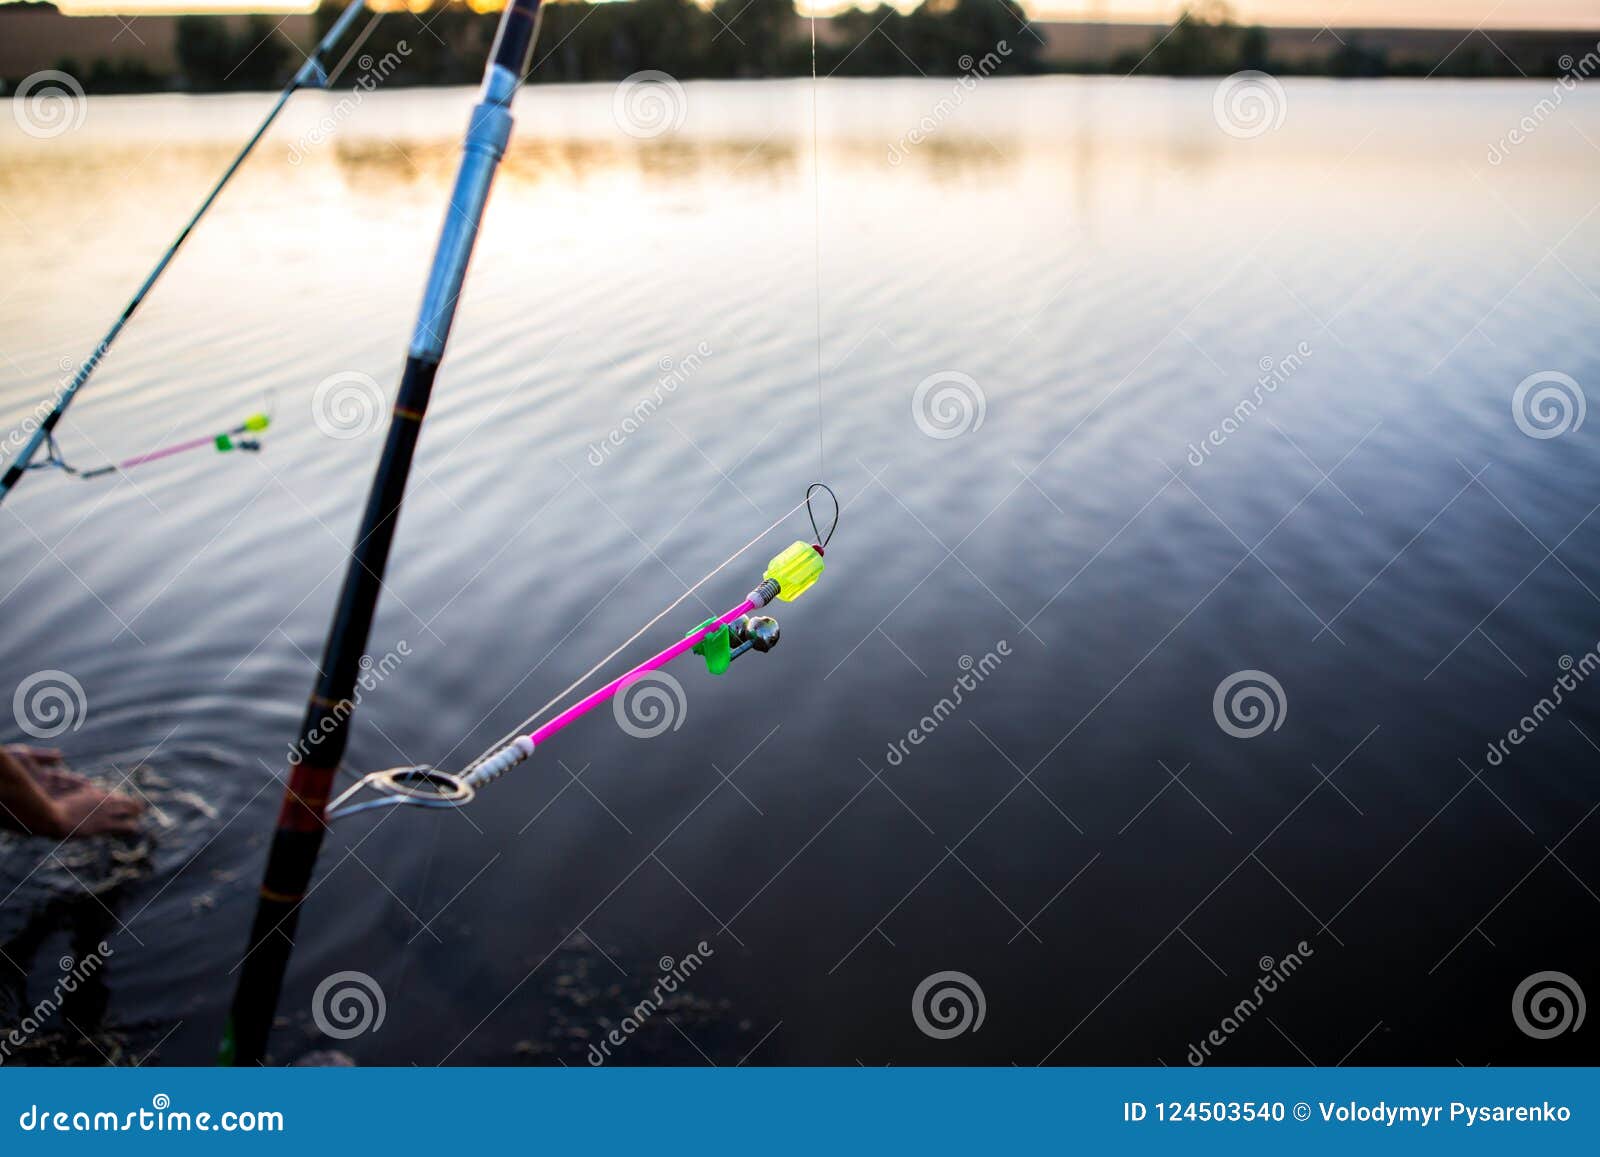 https://thumbs.dreamstime.com/z/bells-fish-bites-fishing-rod-against-background-lake-bite-alarm-feeder-carp-124503540.jpg